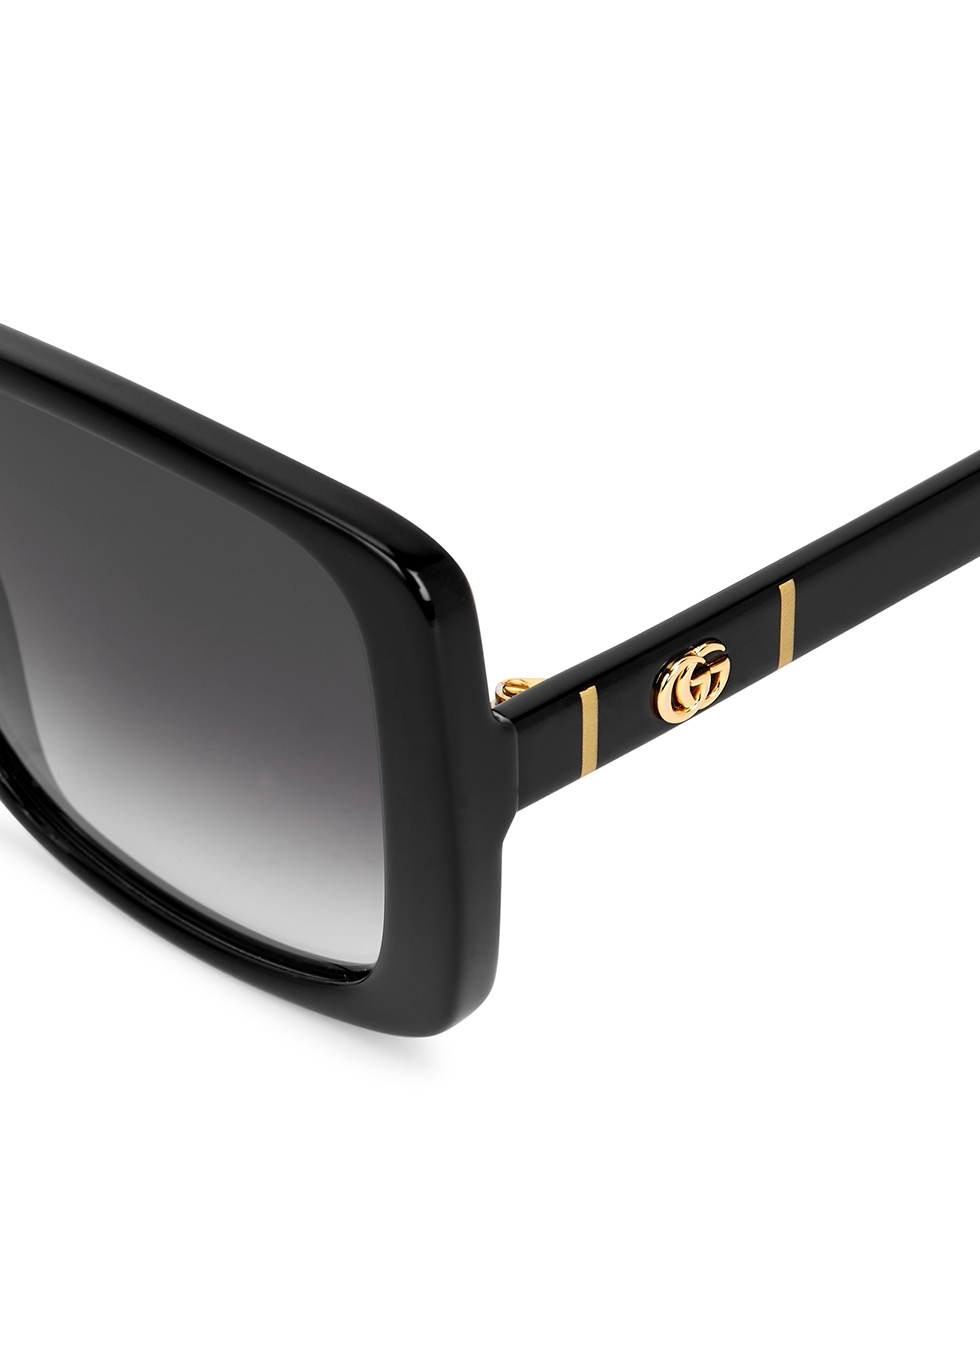 Black oversized sunglasses - Harvey Nichols